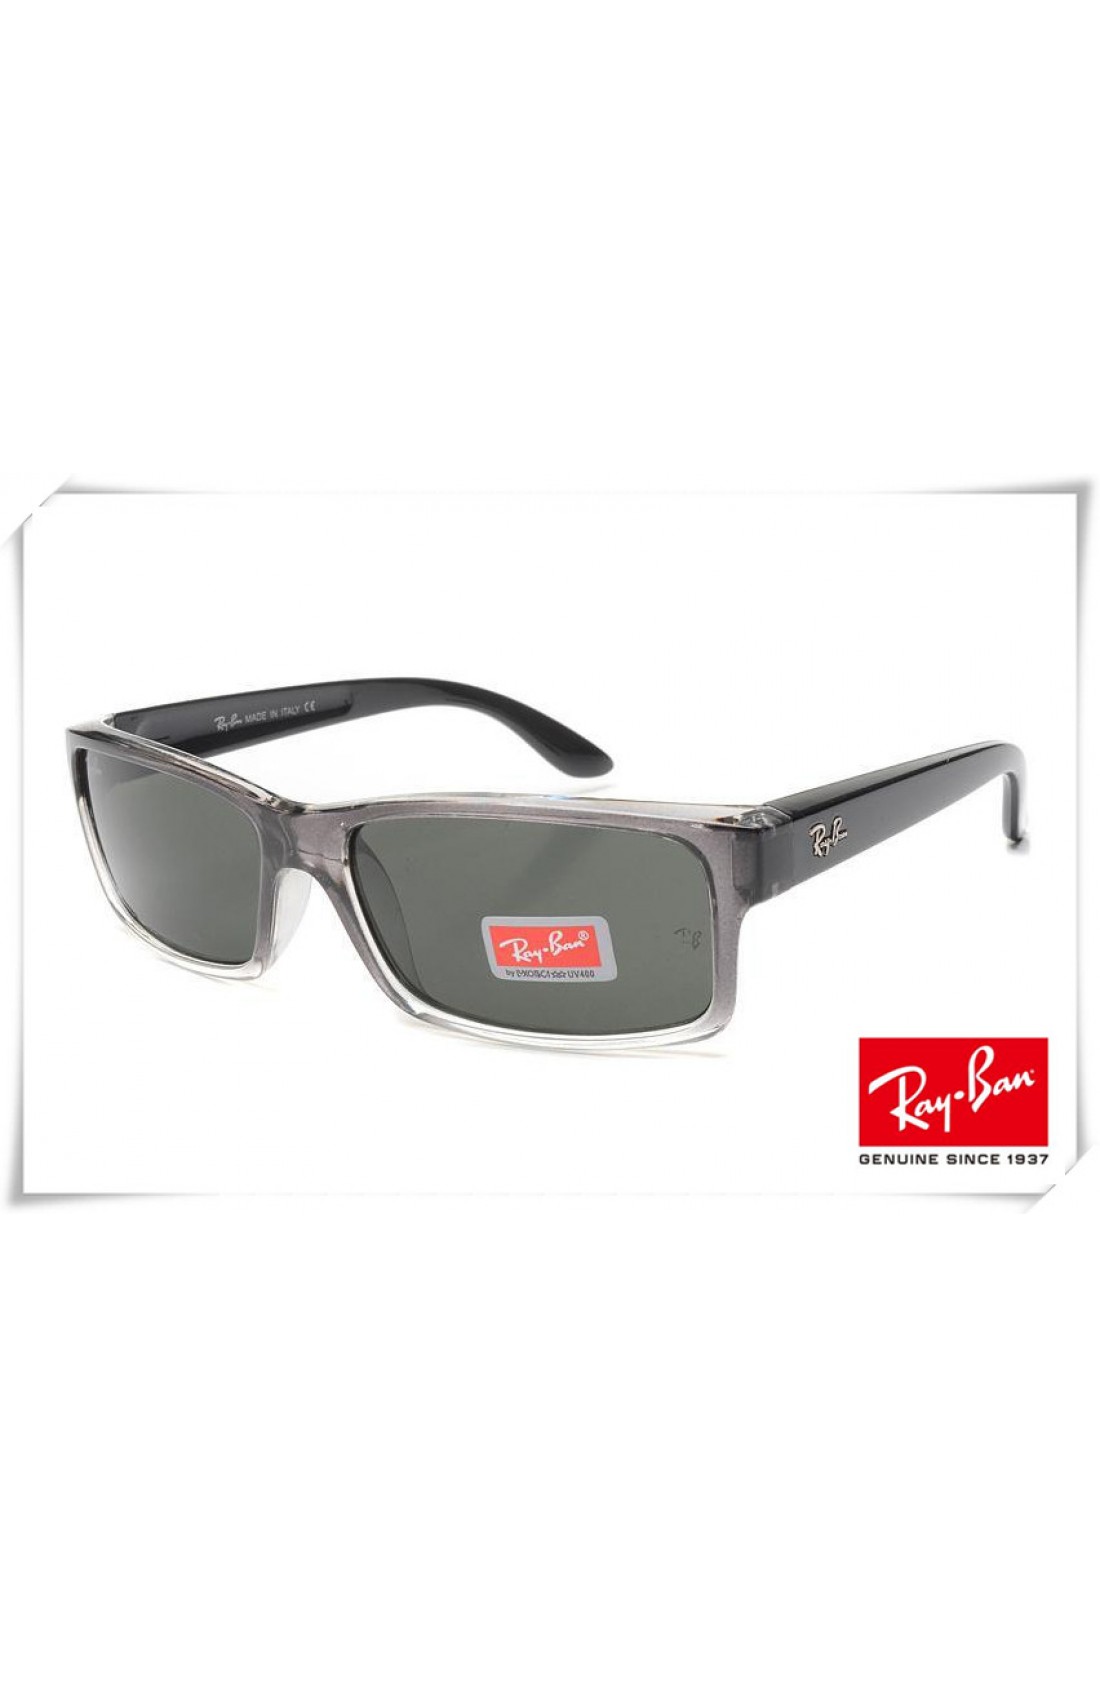 ray ban rb4151 sunglasses